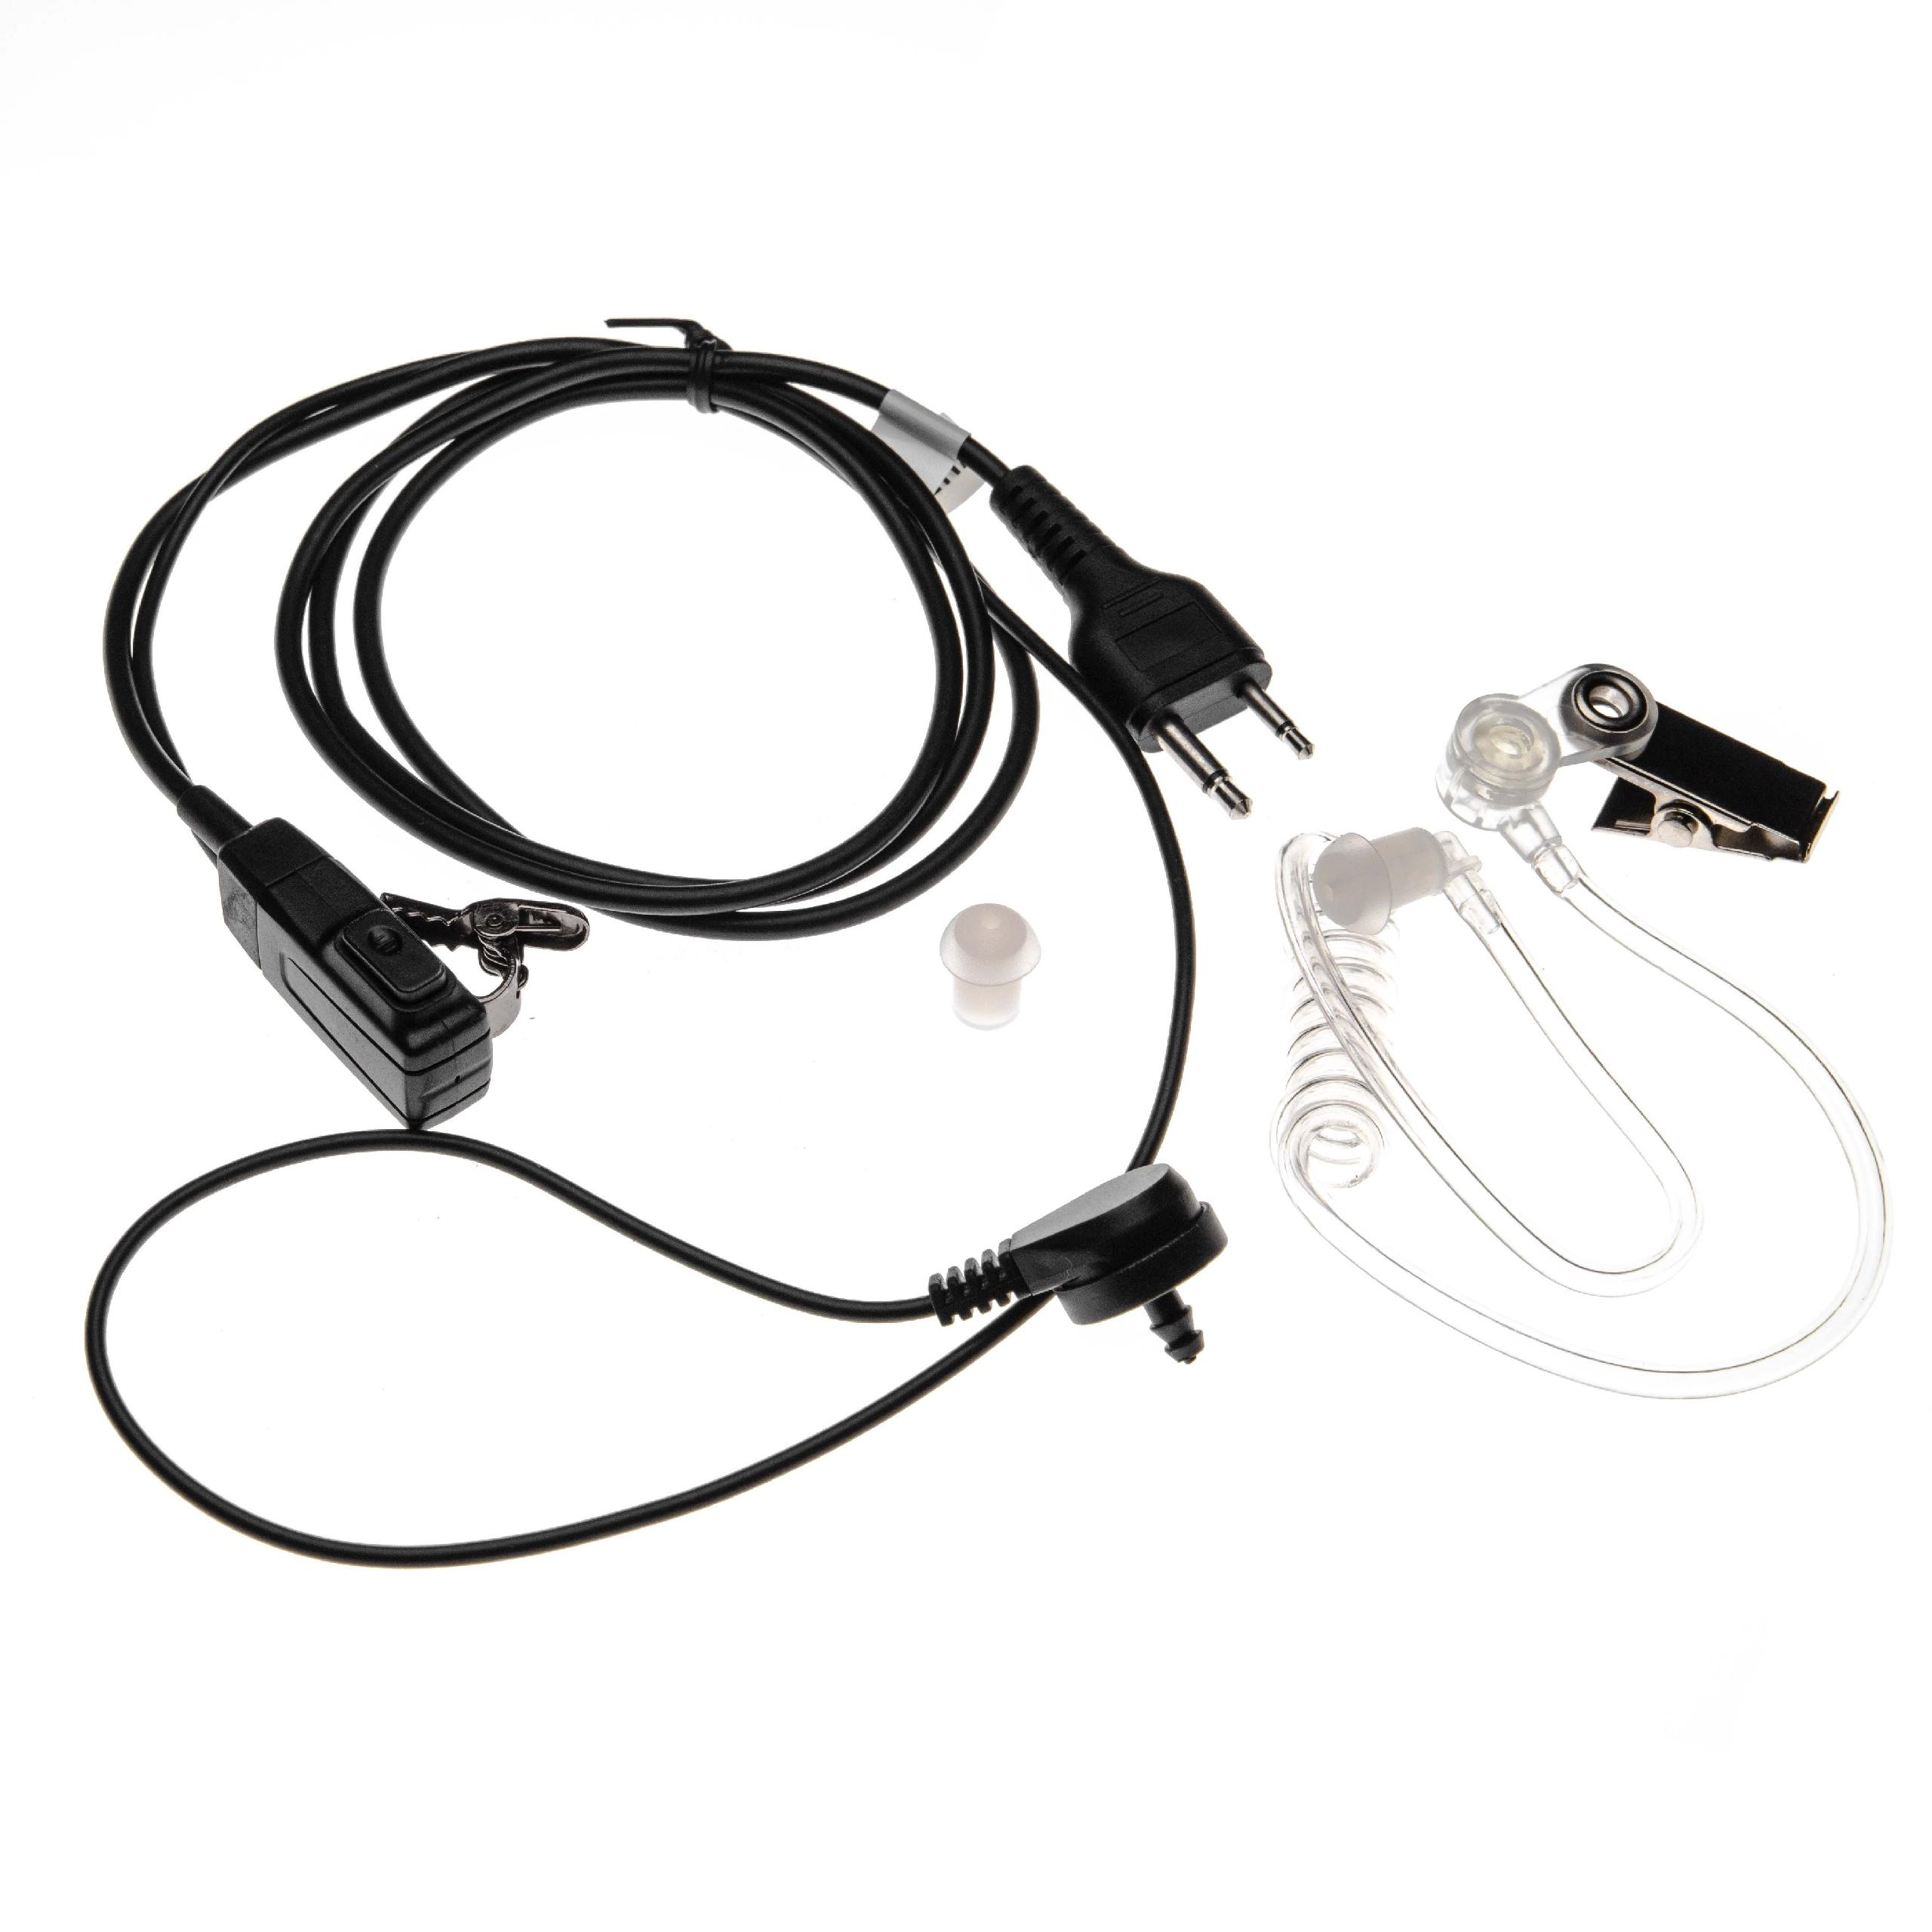 IC-T41E, Headset IC-T41A, IC-T42E, IC-T7, transparent mit IC-T3H, IC-T42, IC-T42A, IC-T2H, kompatibel schwarz / IC-T31CP, On-ear VHBW Icom